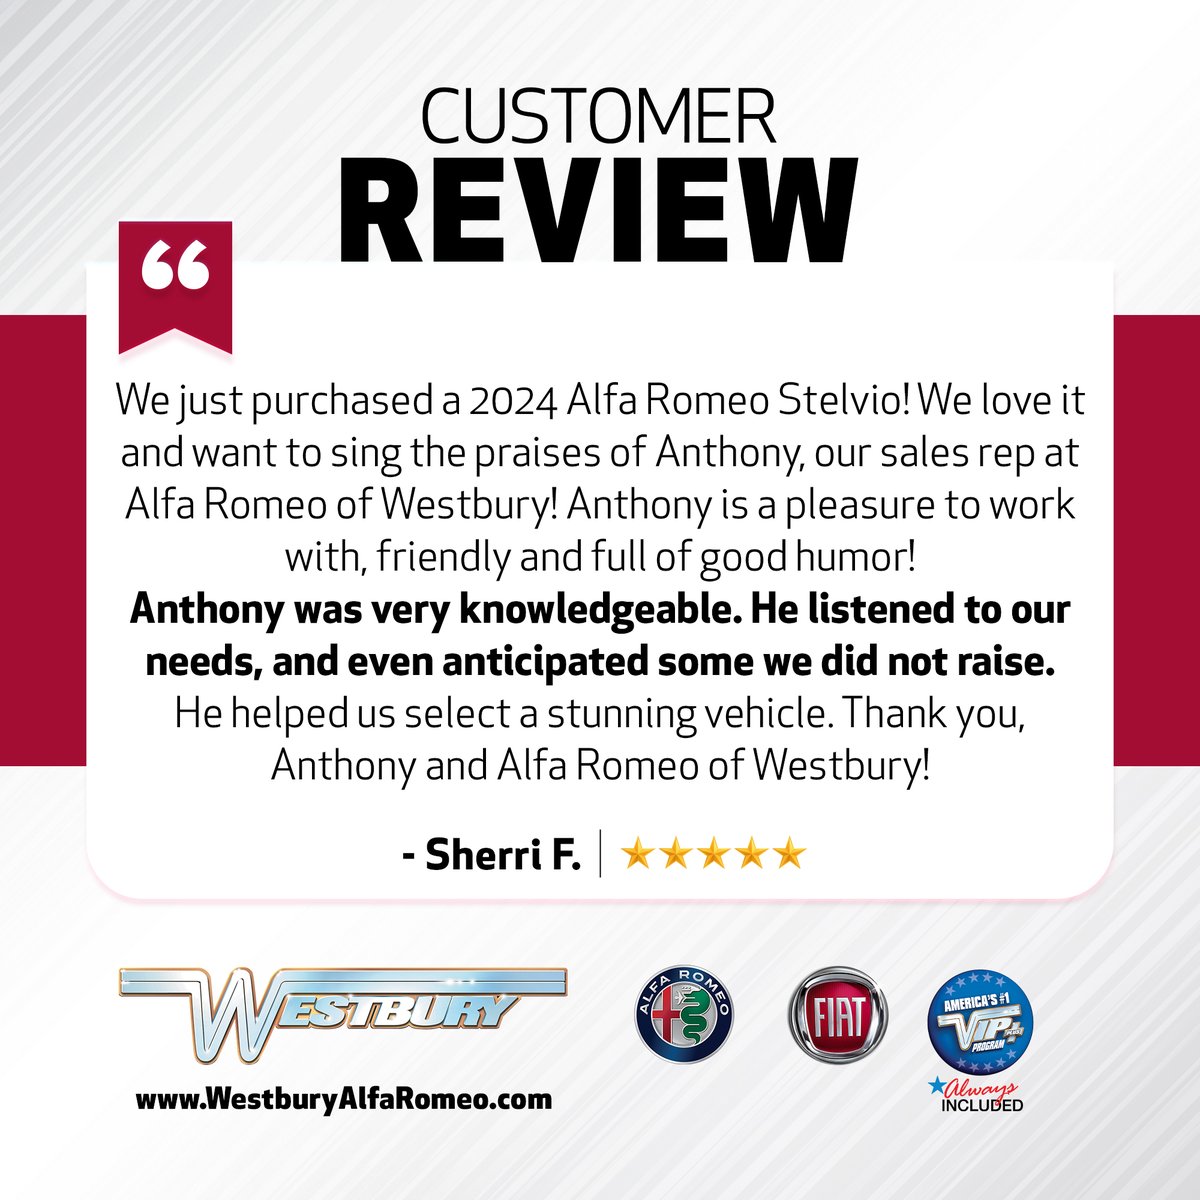 🌟🚙🙌 Hear it straight from our happy customer, Sherri. Congrats on your new ride!

💻 SHOP ONLINE
🌐 WestburyAlfaRomeo.com
📞 516-814-2910

#AlfaRomeo #HappyCustomer #LongIsland #LuxuryCars #NewYork #NY #NYC #NassauCounty #SuffolkCounty #Stelvio #AlfaRomeoStelvio